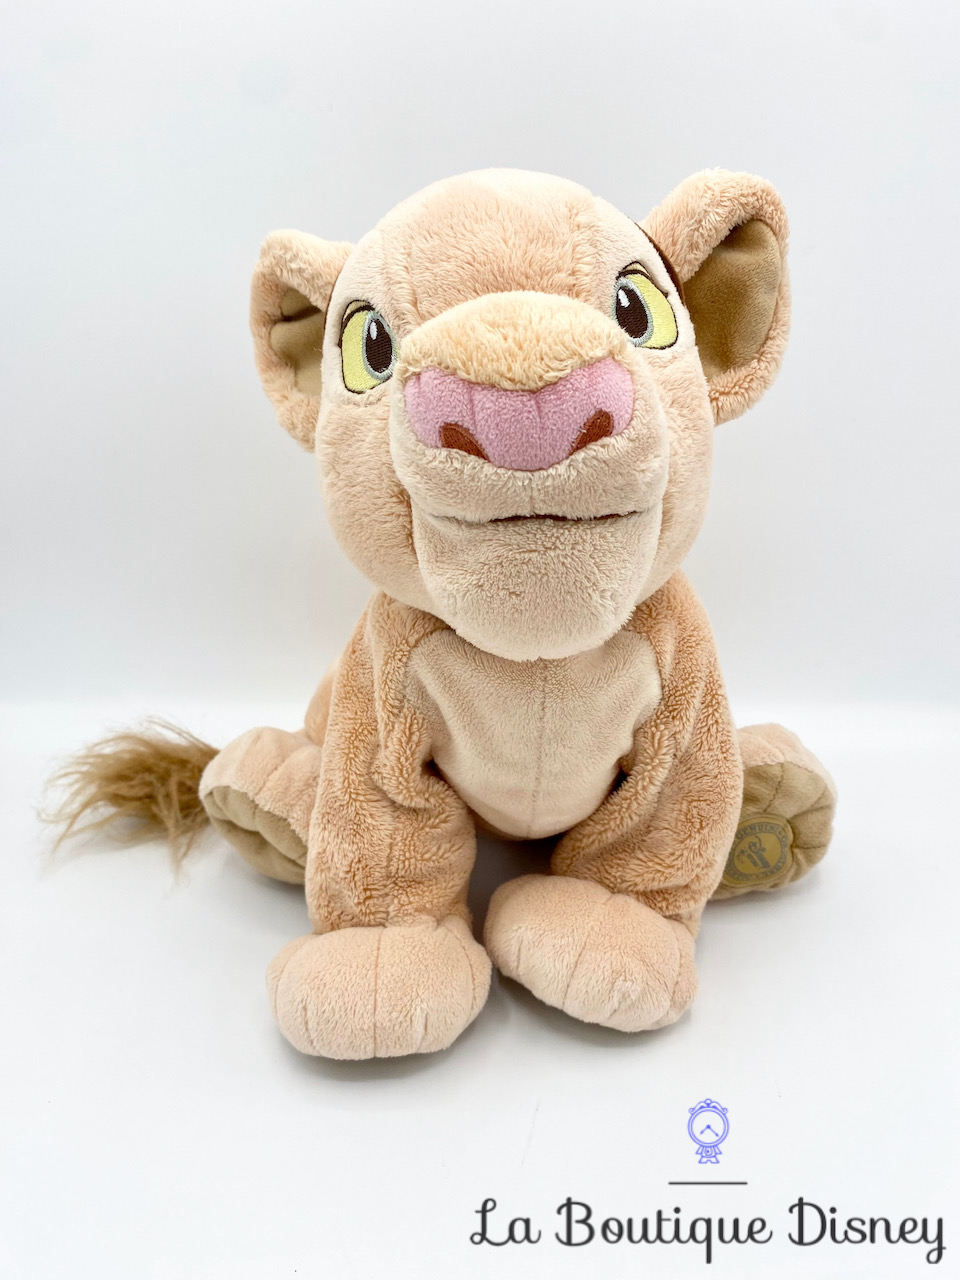 Peluche Lion - Beige - 30 cm